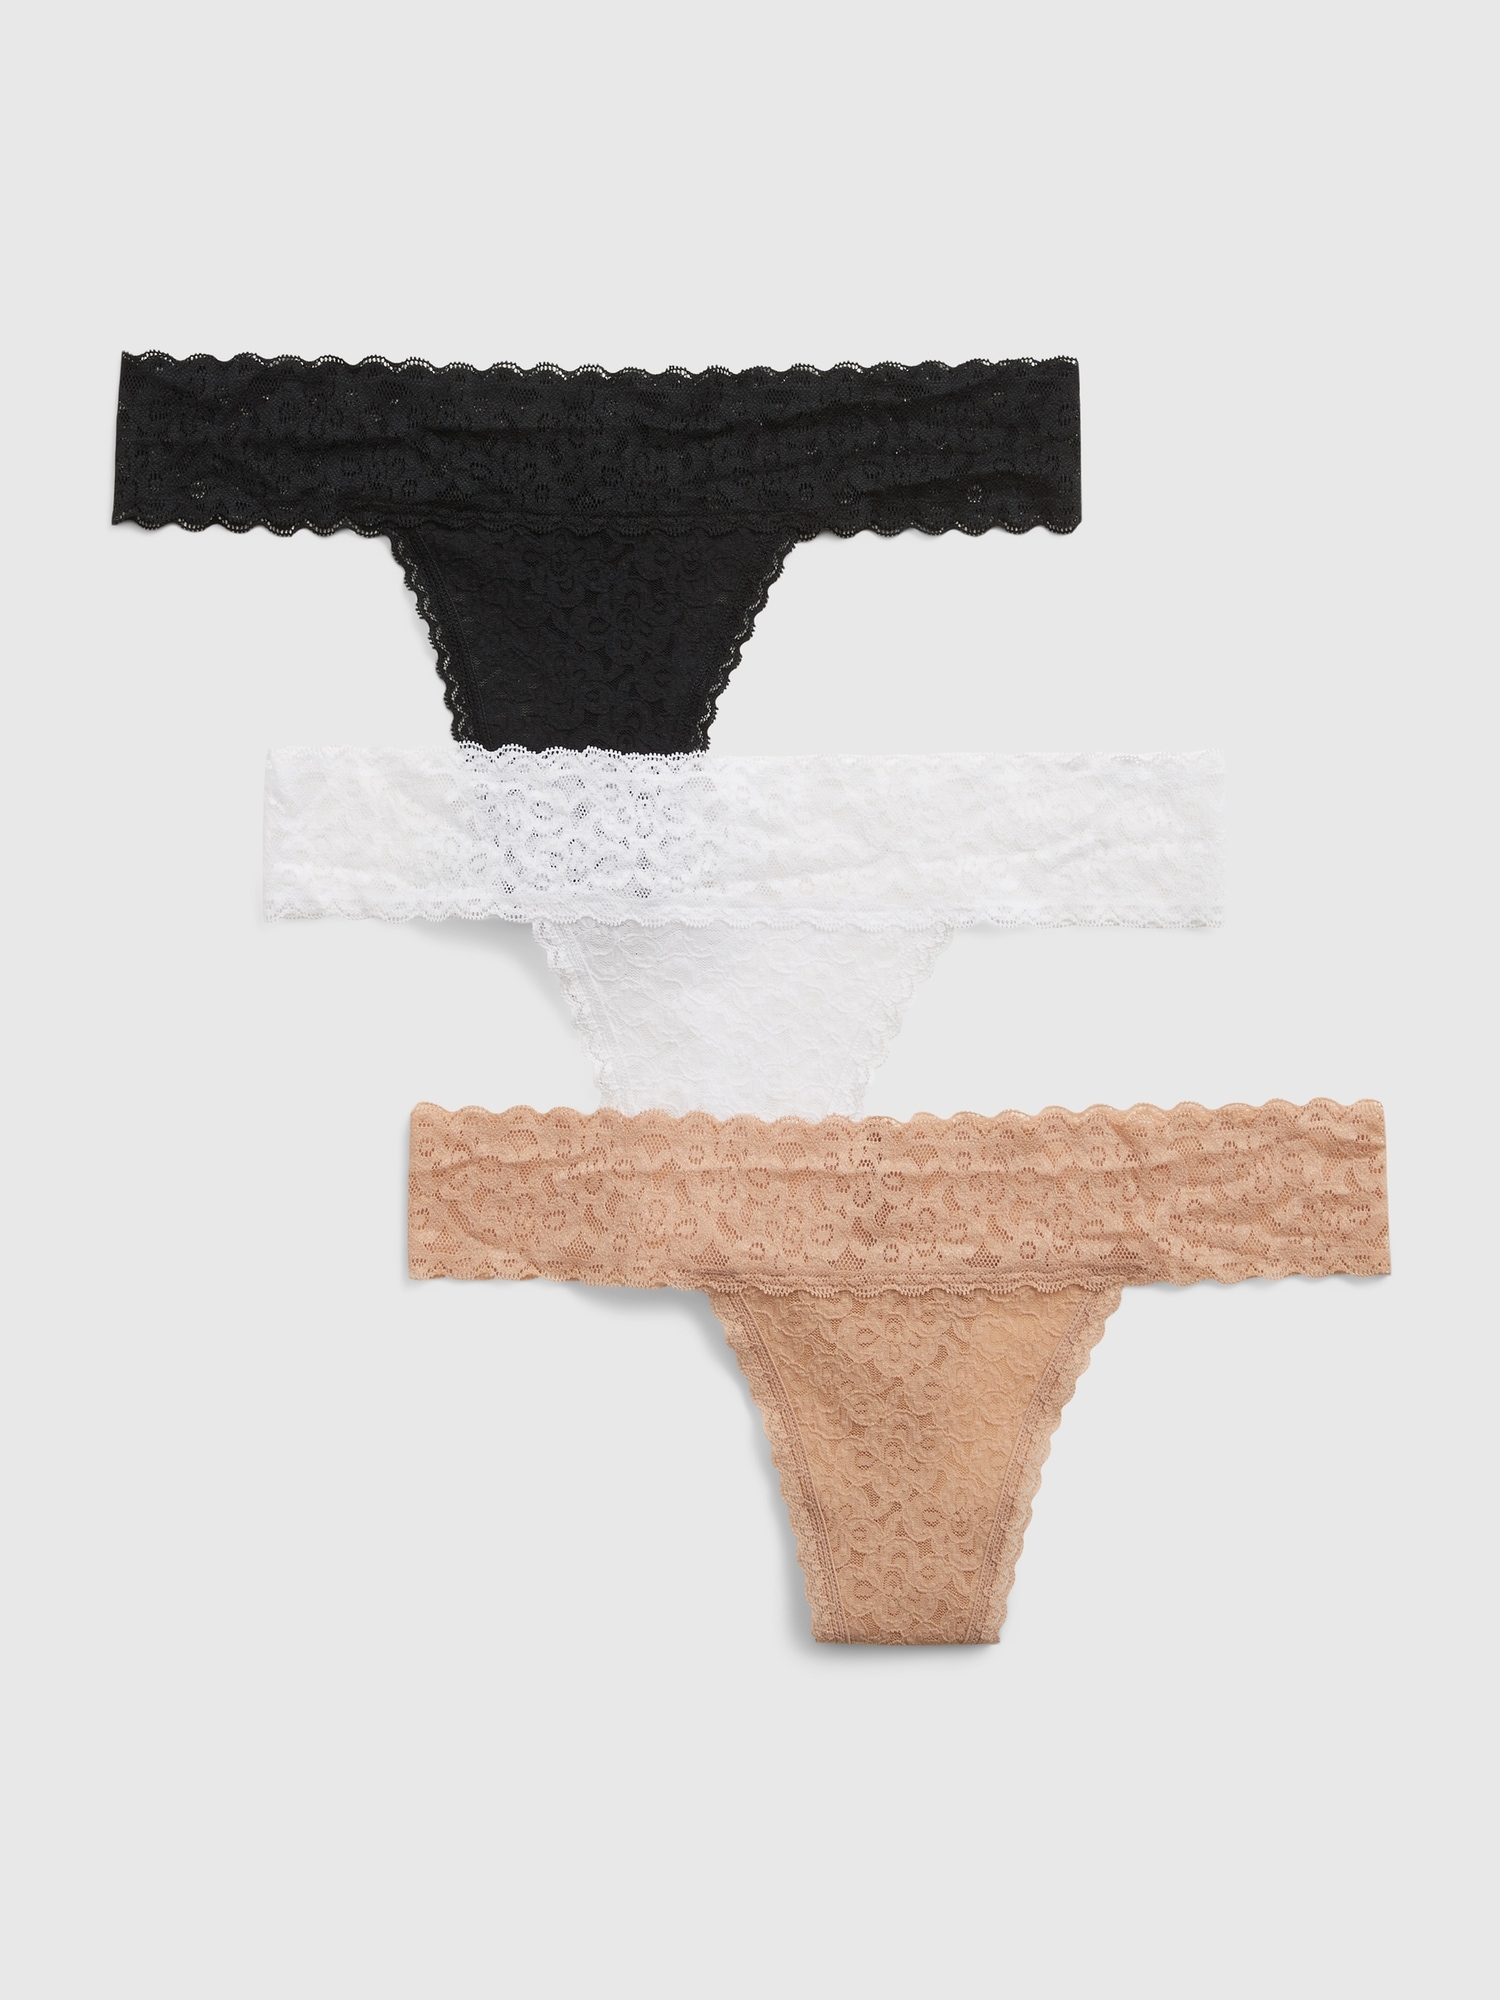 GAP Women's 3-Pack High-Rise Thong Underpants Underwear